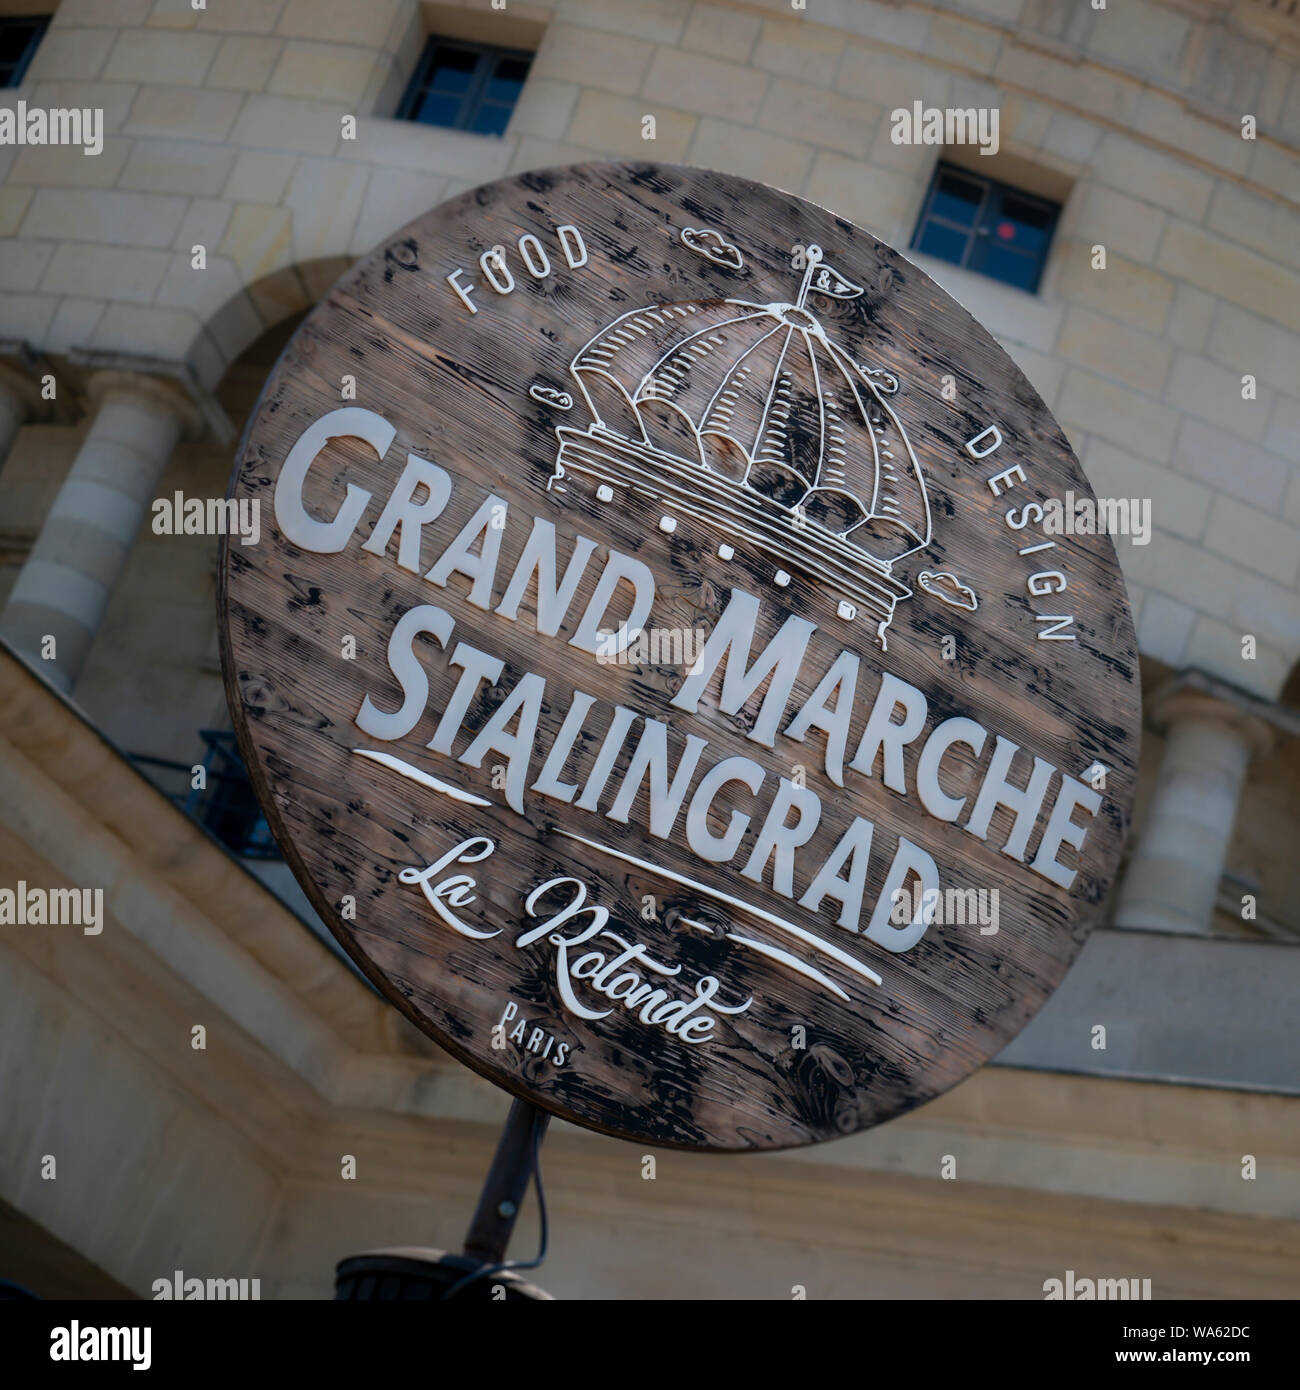 PARIS, FRANCE - AUGUST 02, 2018: Sign for La Rotonde Restaurant at Le Grand Marche Stalingrad - an Exhibition and Trade Show venue Stock Photo